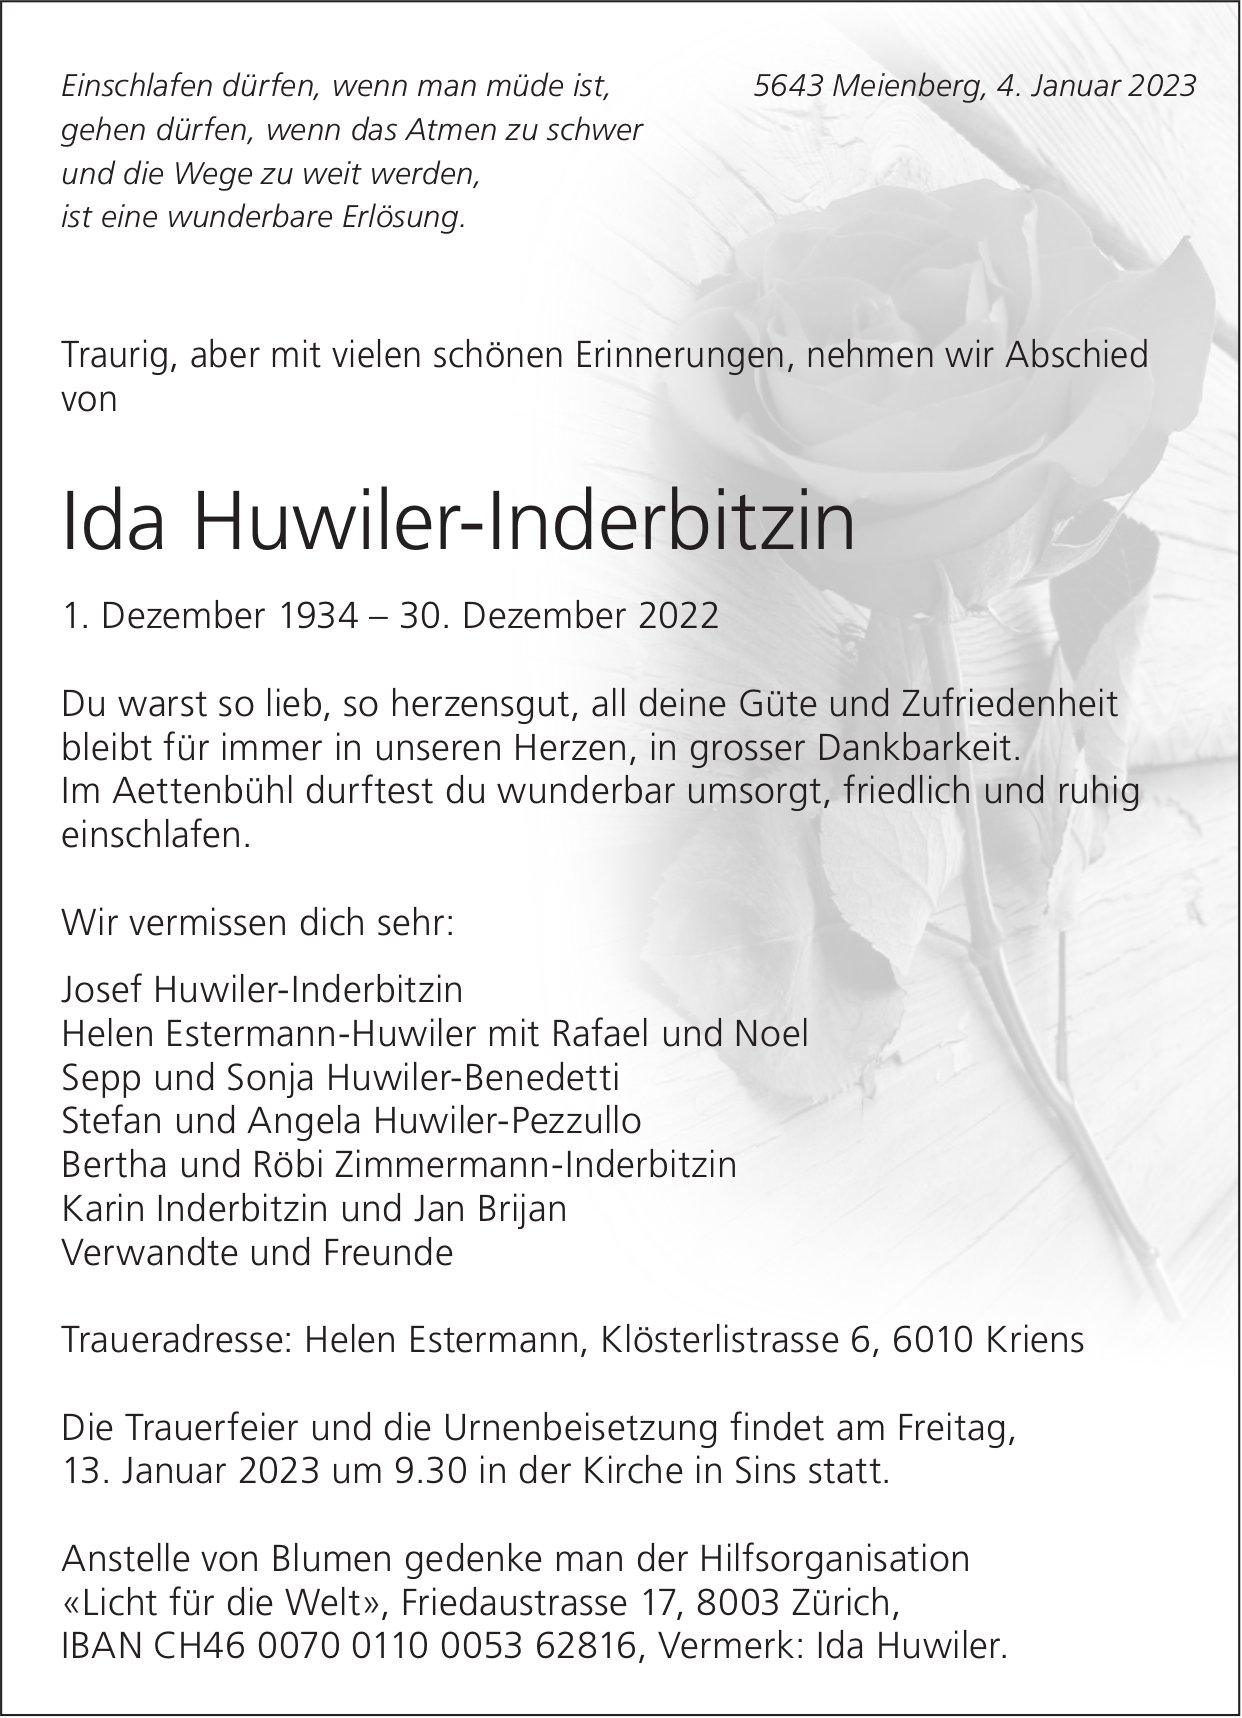 Huwiler-Inderbitzin Ida, Dezember 2022 / TA